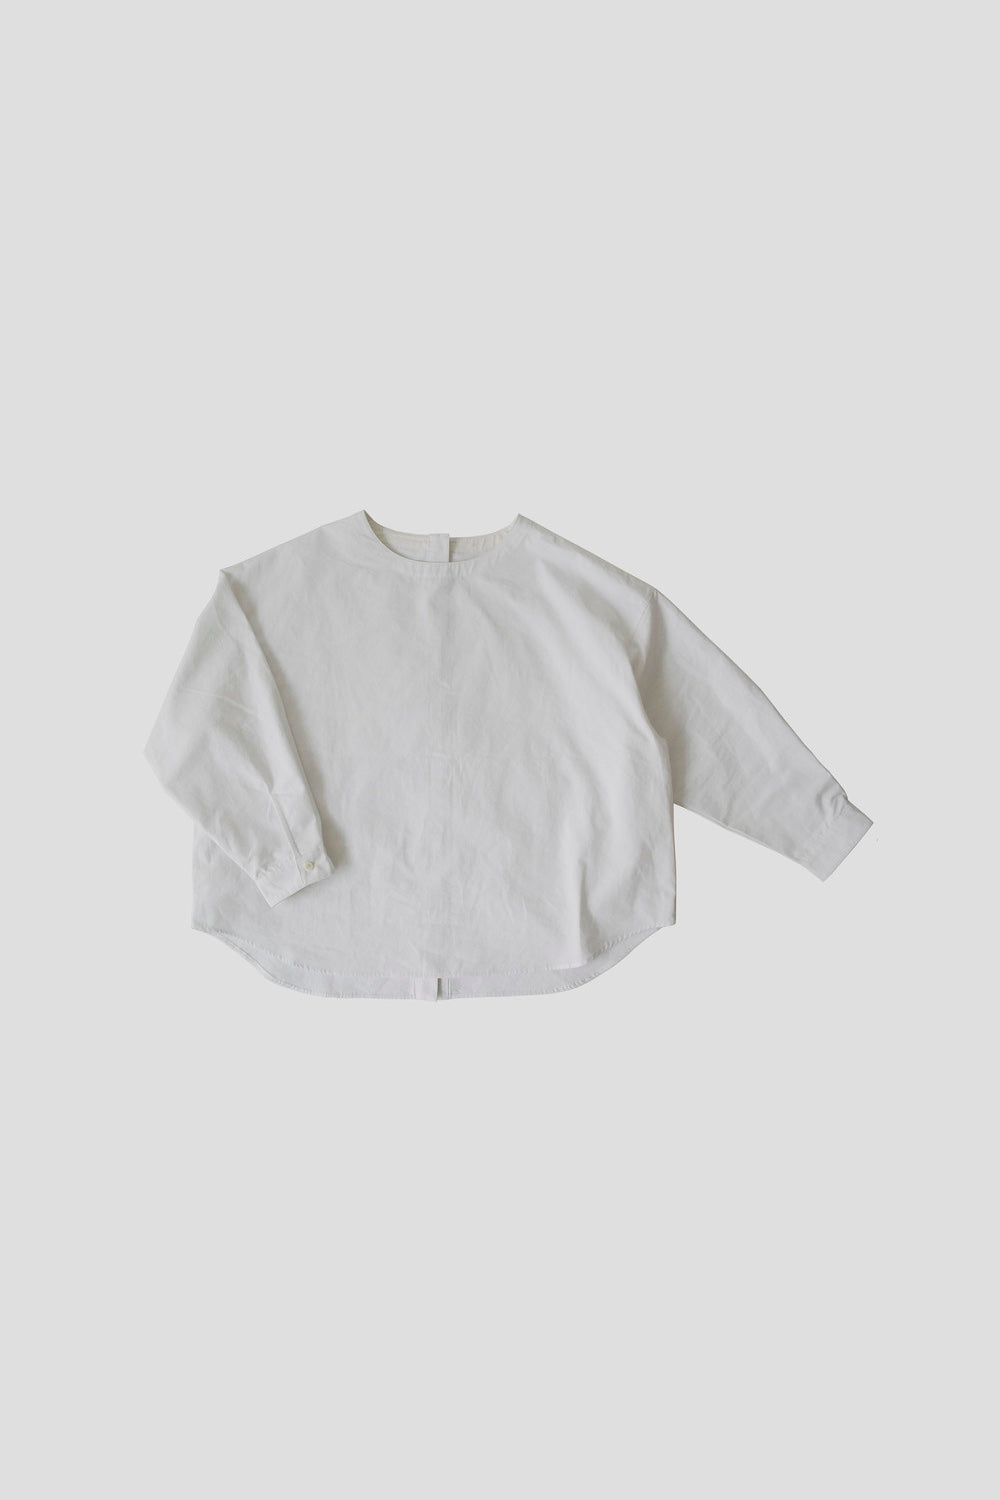 Homeoffice Cotton Shirts WHITE